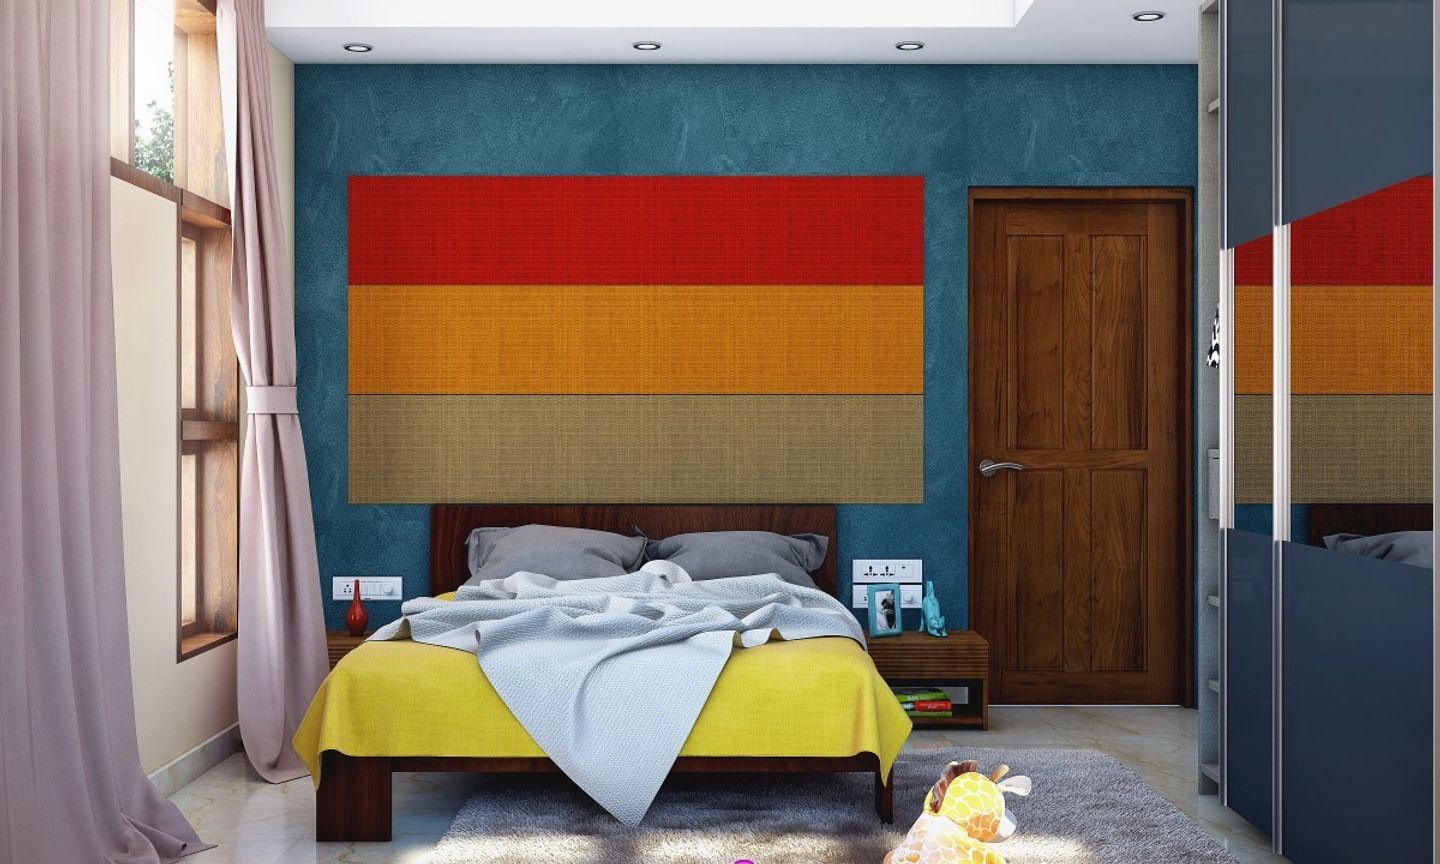 Modern Kid's Room Design With Wallpaint